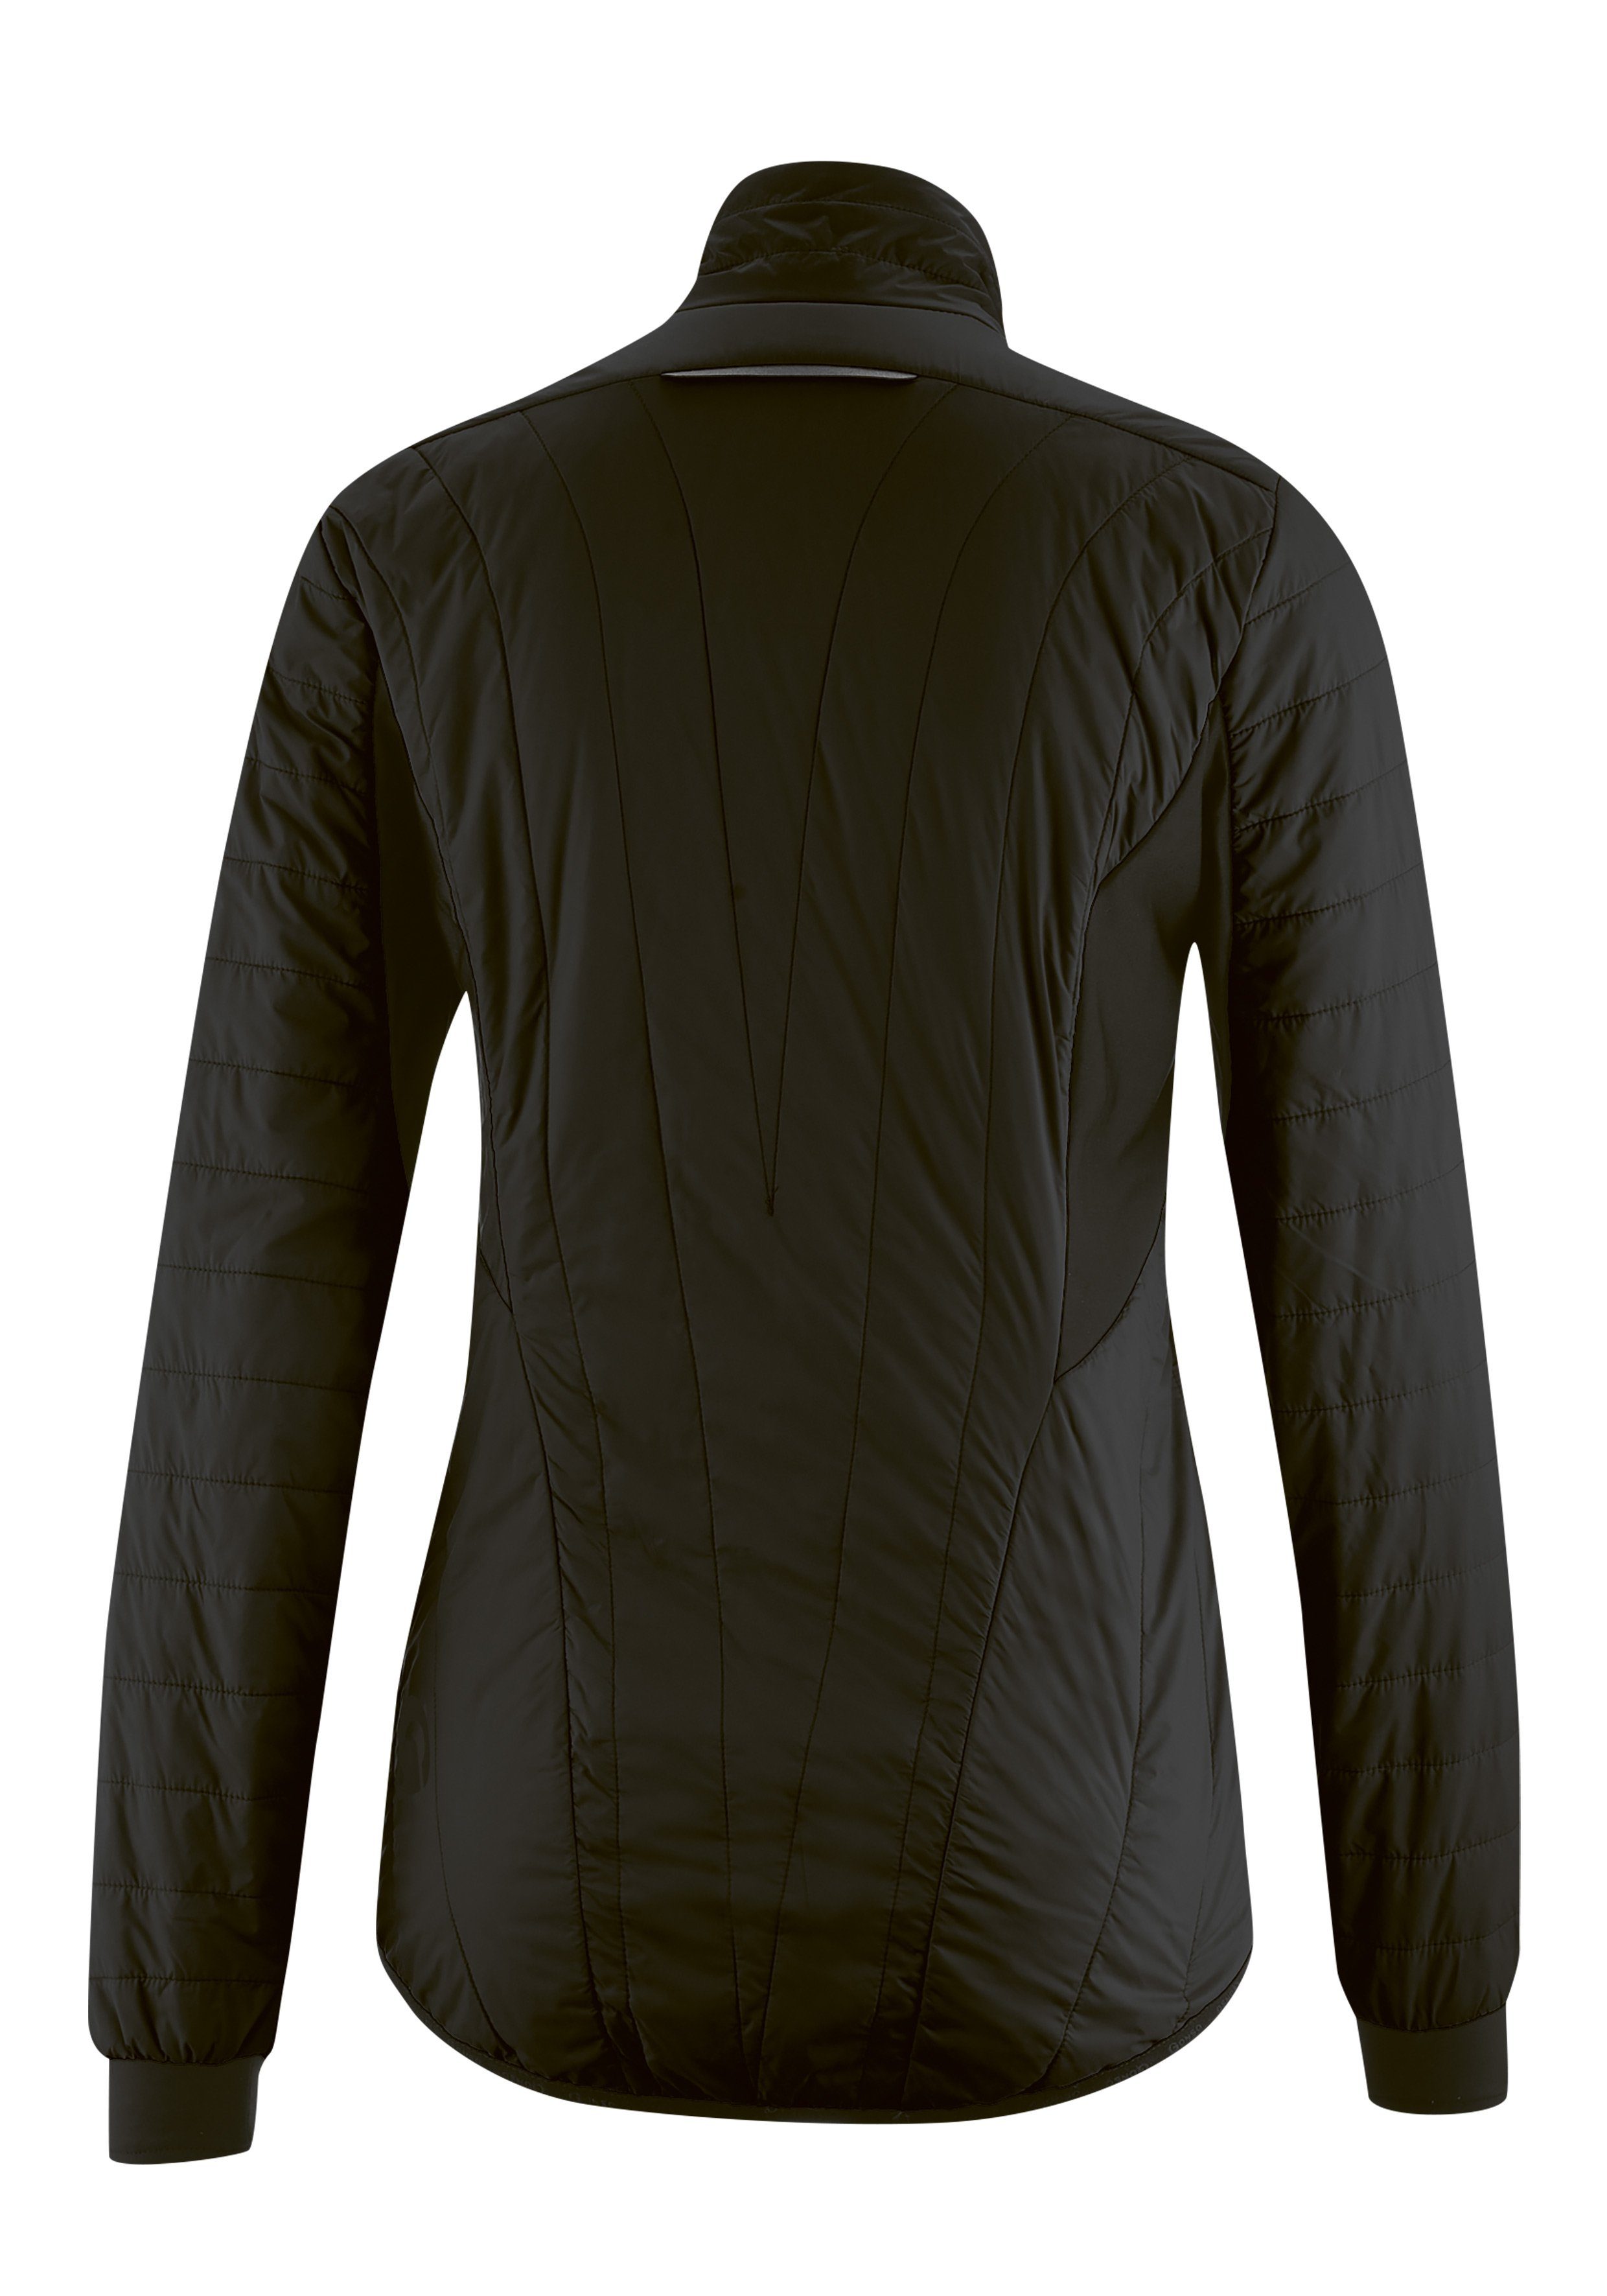 Teixeira Gonso und schwarz Primaloft-Jacke, warm, atmungsaktiv Damen winddicht Fahrradjacke